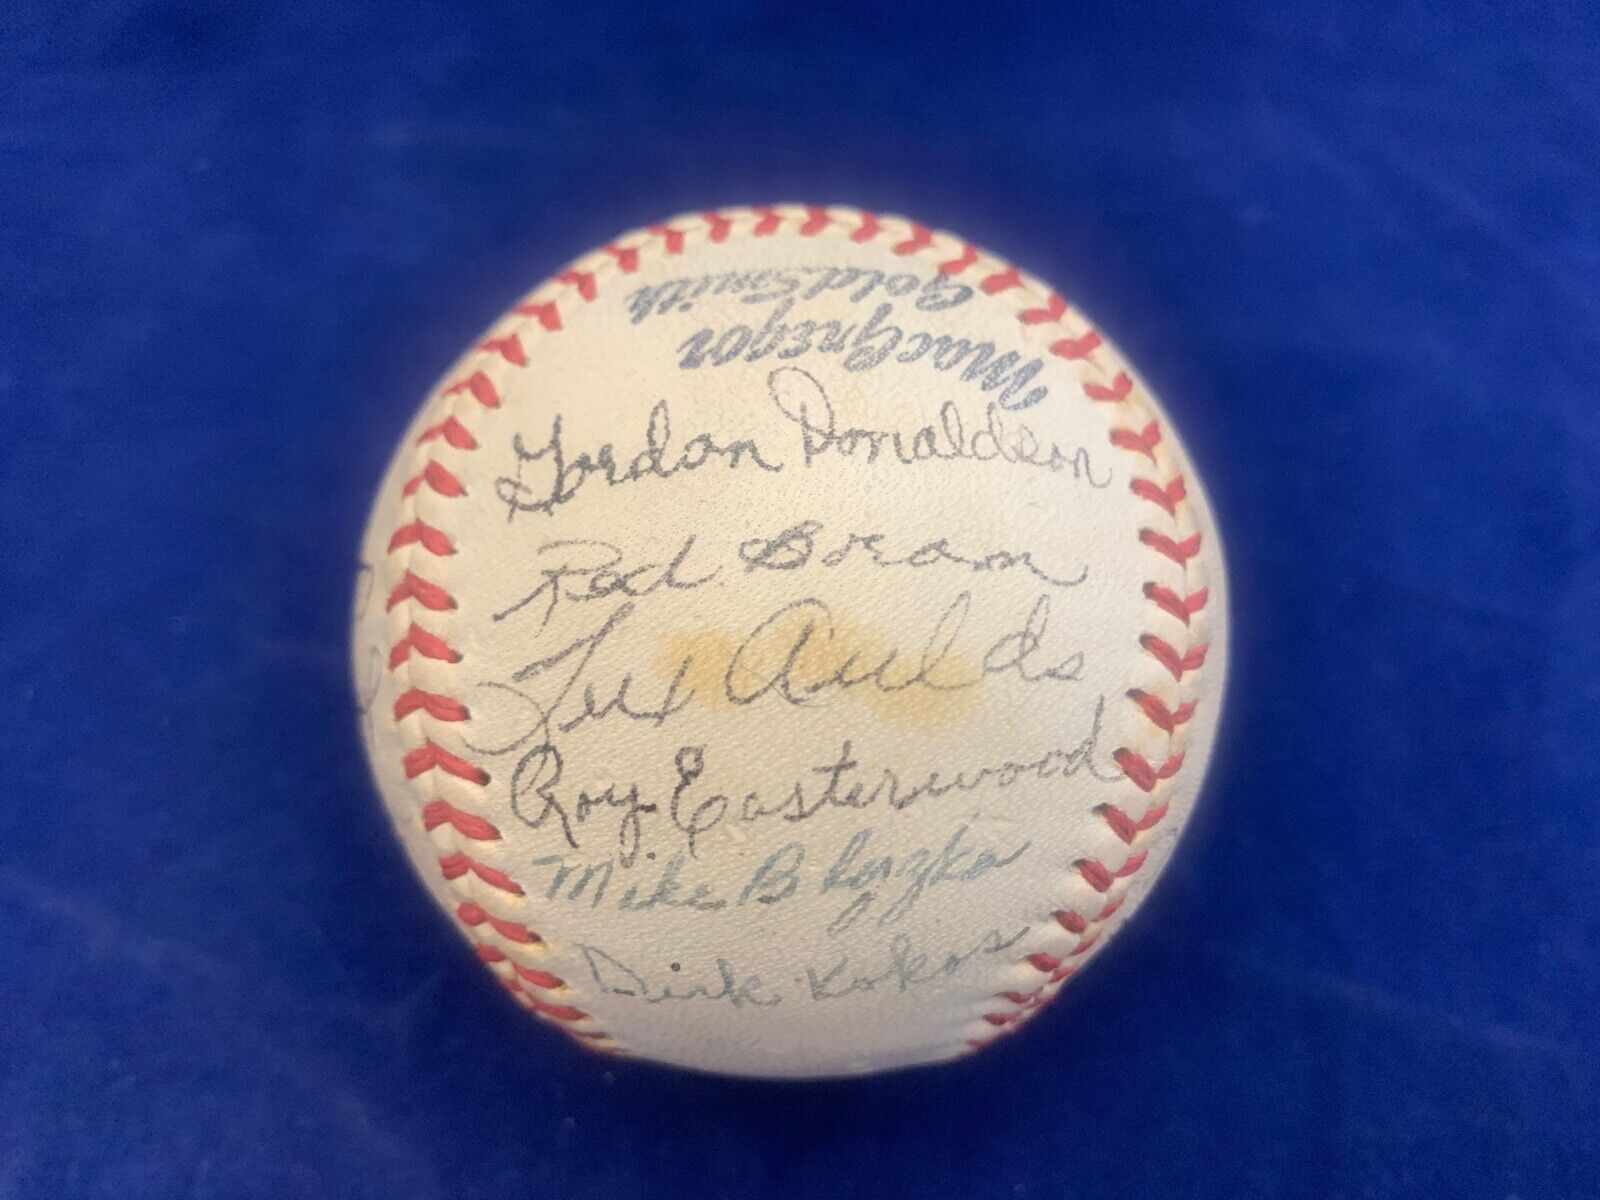 1940's Official Macgregor Goldsmith 97 League Baseball signed 18 autos McBride